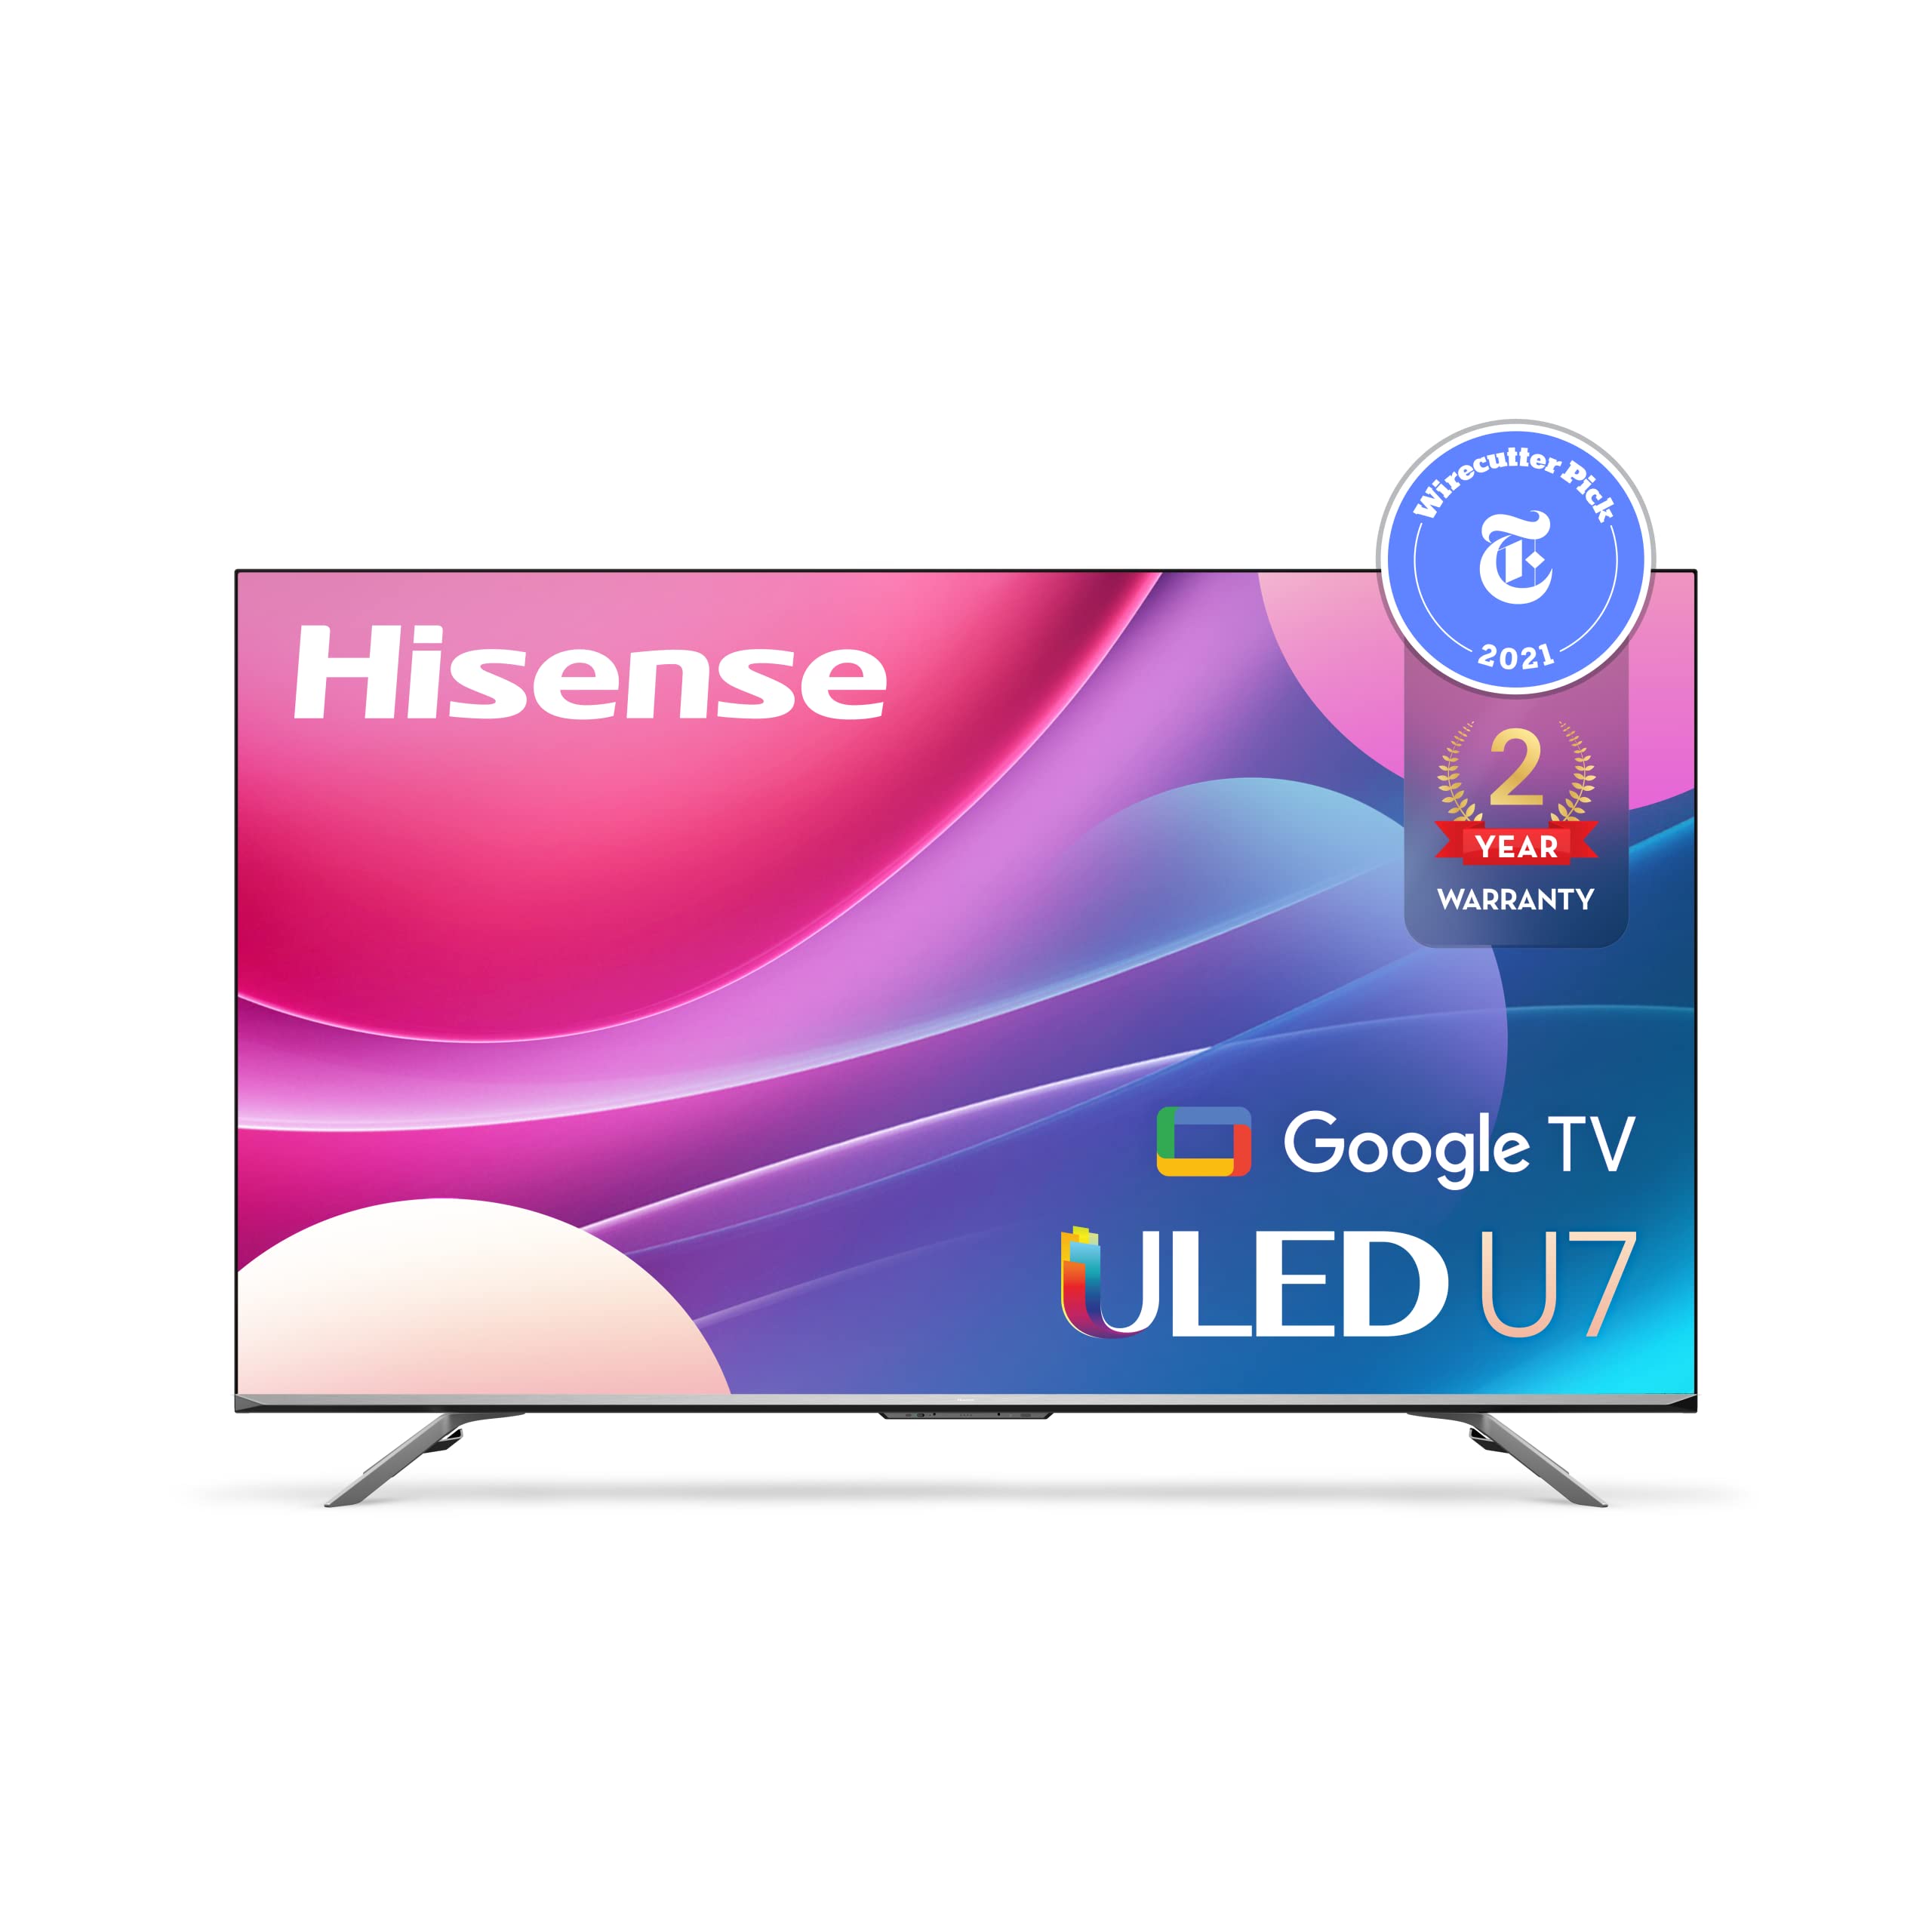 Hisense ULED Premium U7H QLED Series 75-inch Class Quantum Dot Google 4K Smart TV (75U7H, 2022 Model) 75-Inch Smart TV